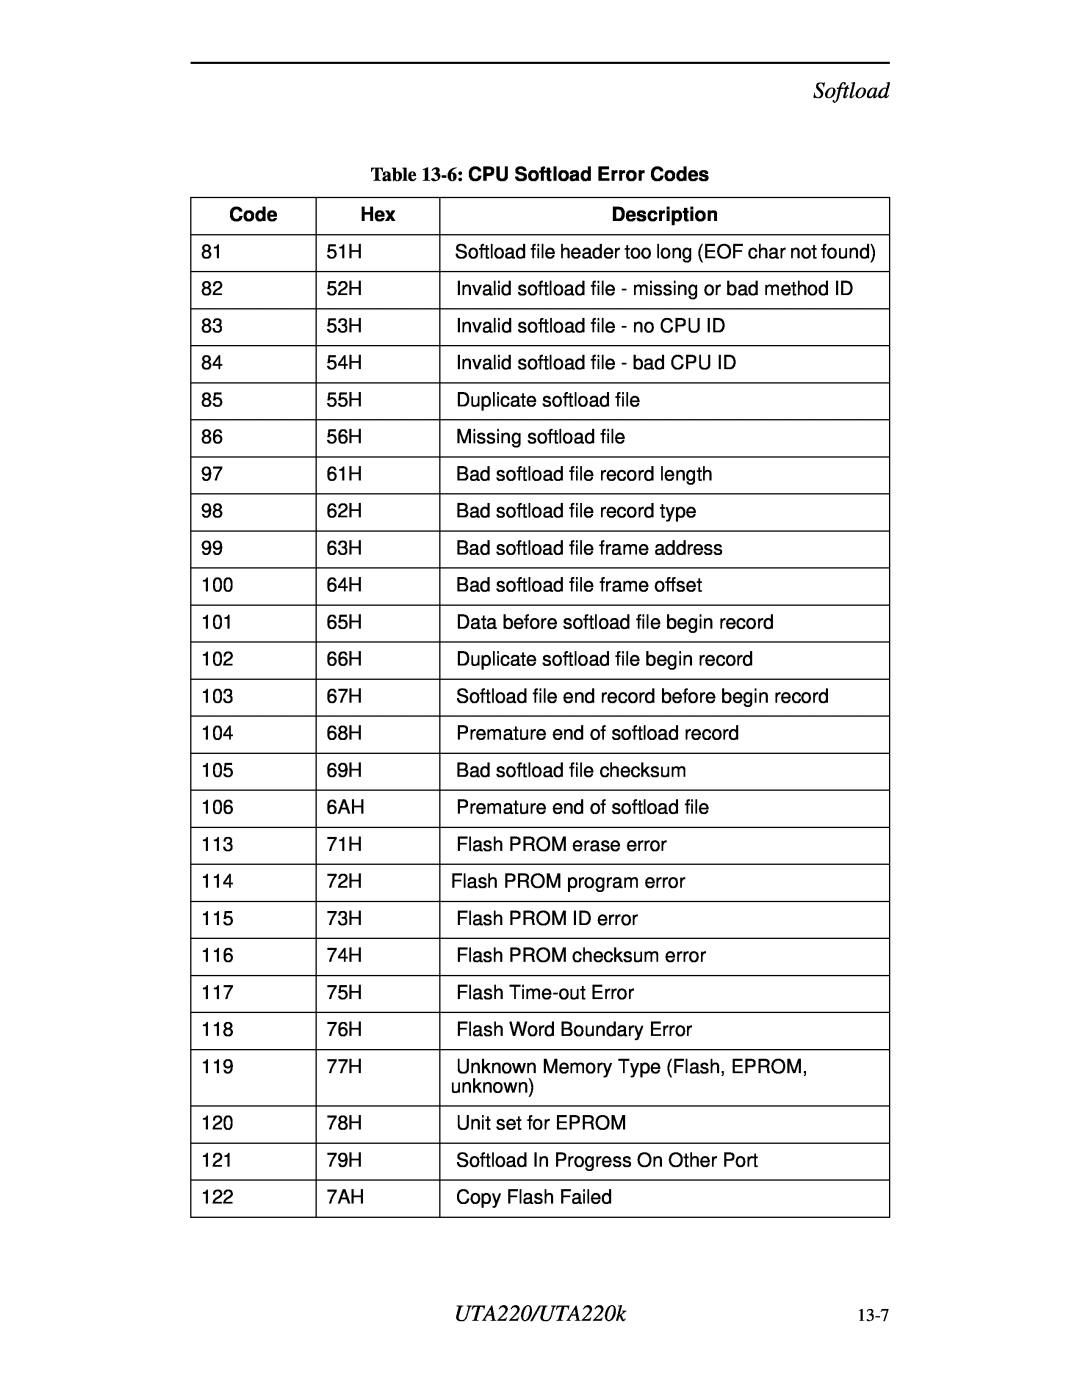 Northern UTA220/UTA220k manual 6 CPU Softload Error Codes, Description 